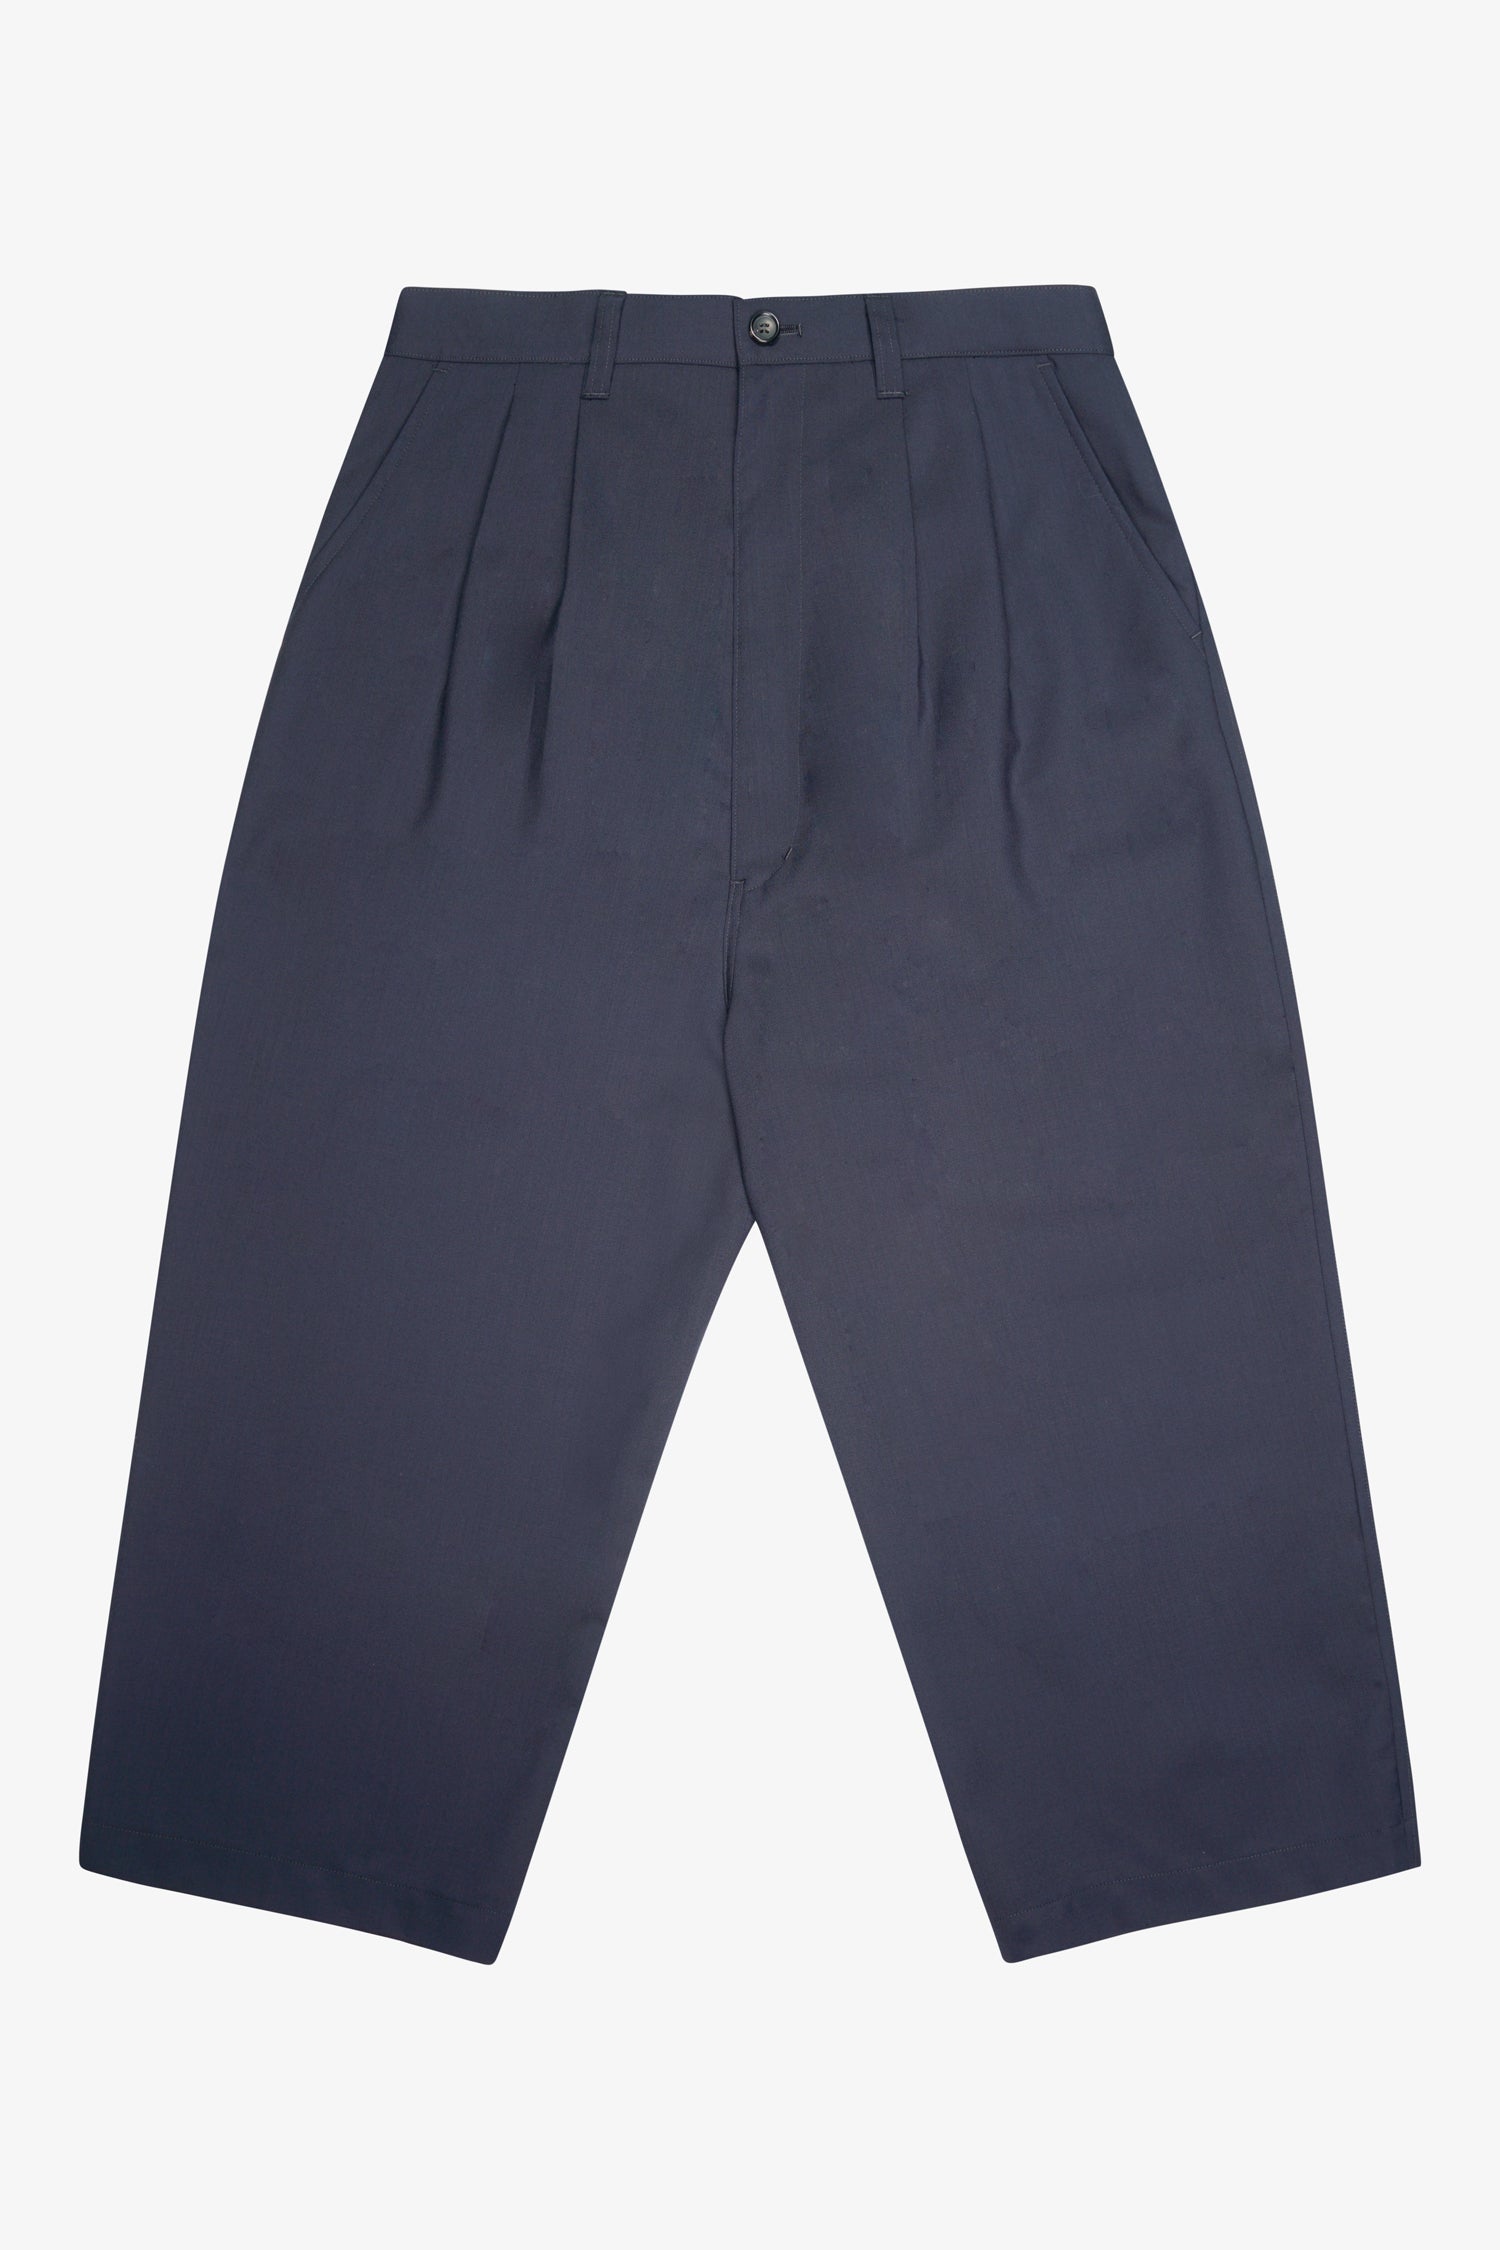 Selectshop FRAME - COMME DES GARÇONS HOMME Wool Toro Two-Tuck Tapered Pants Bottoms Dubai